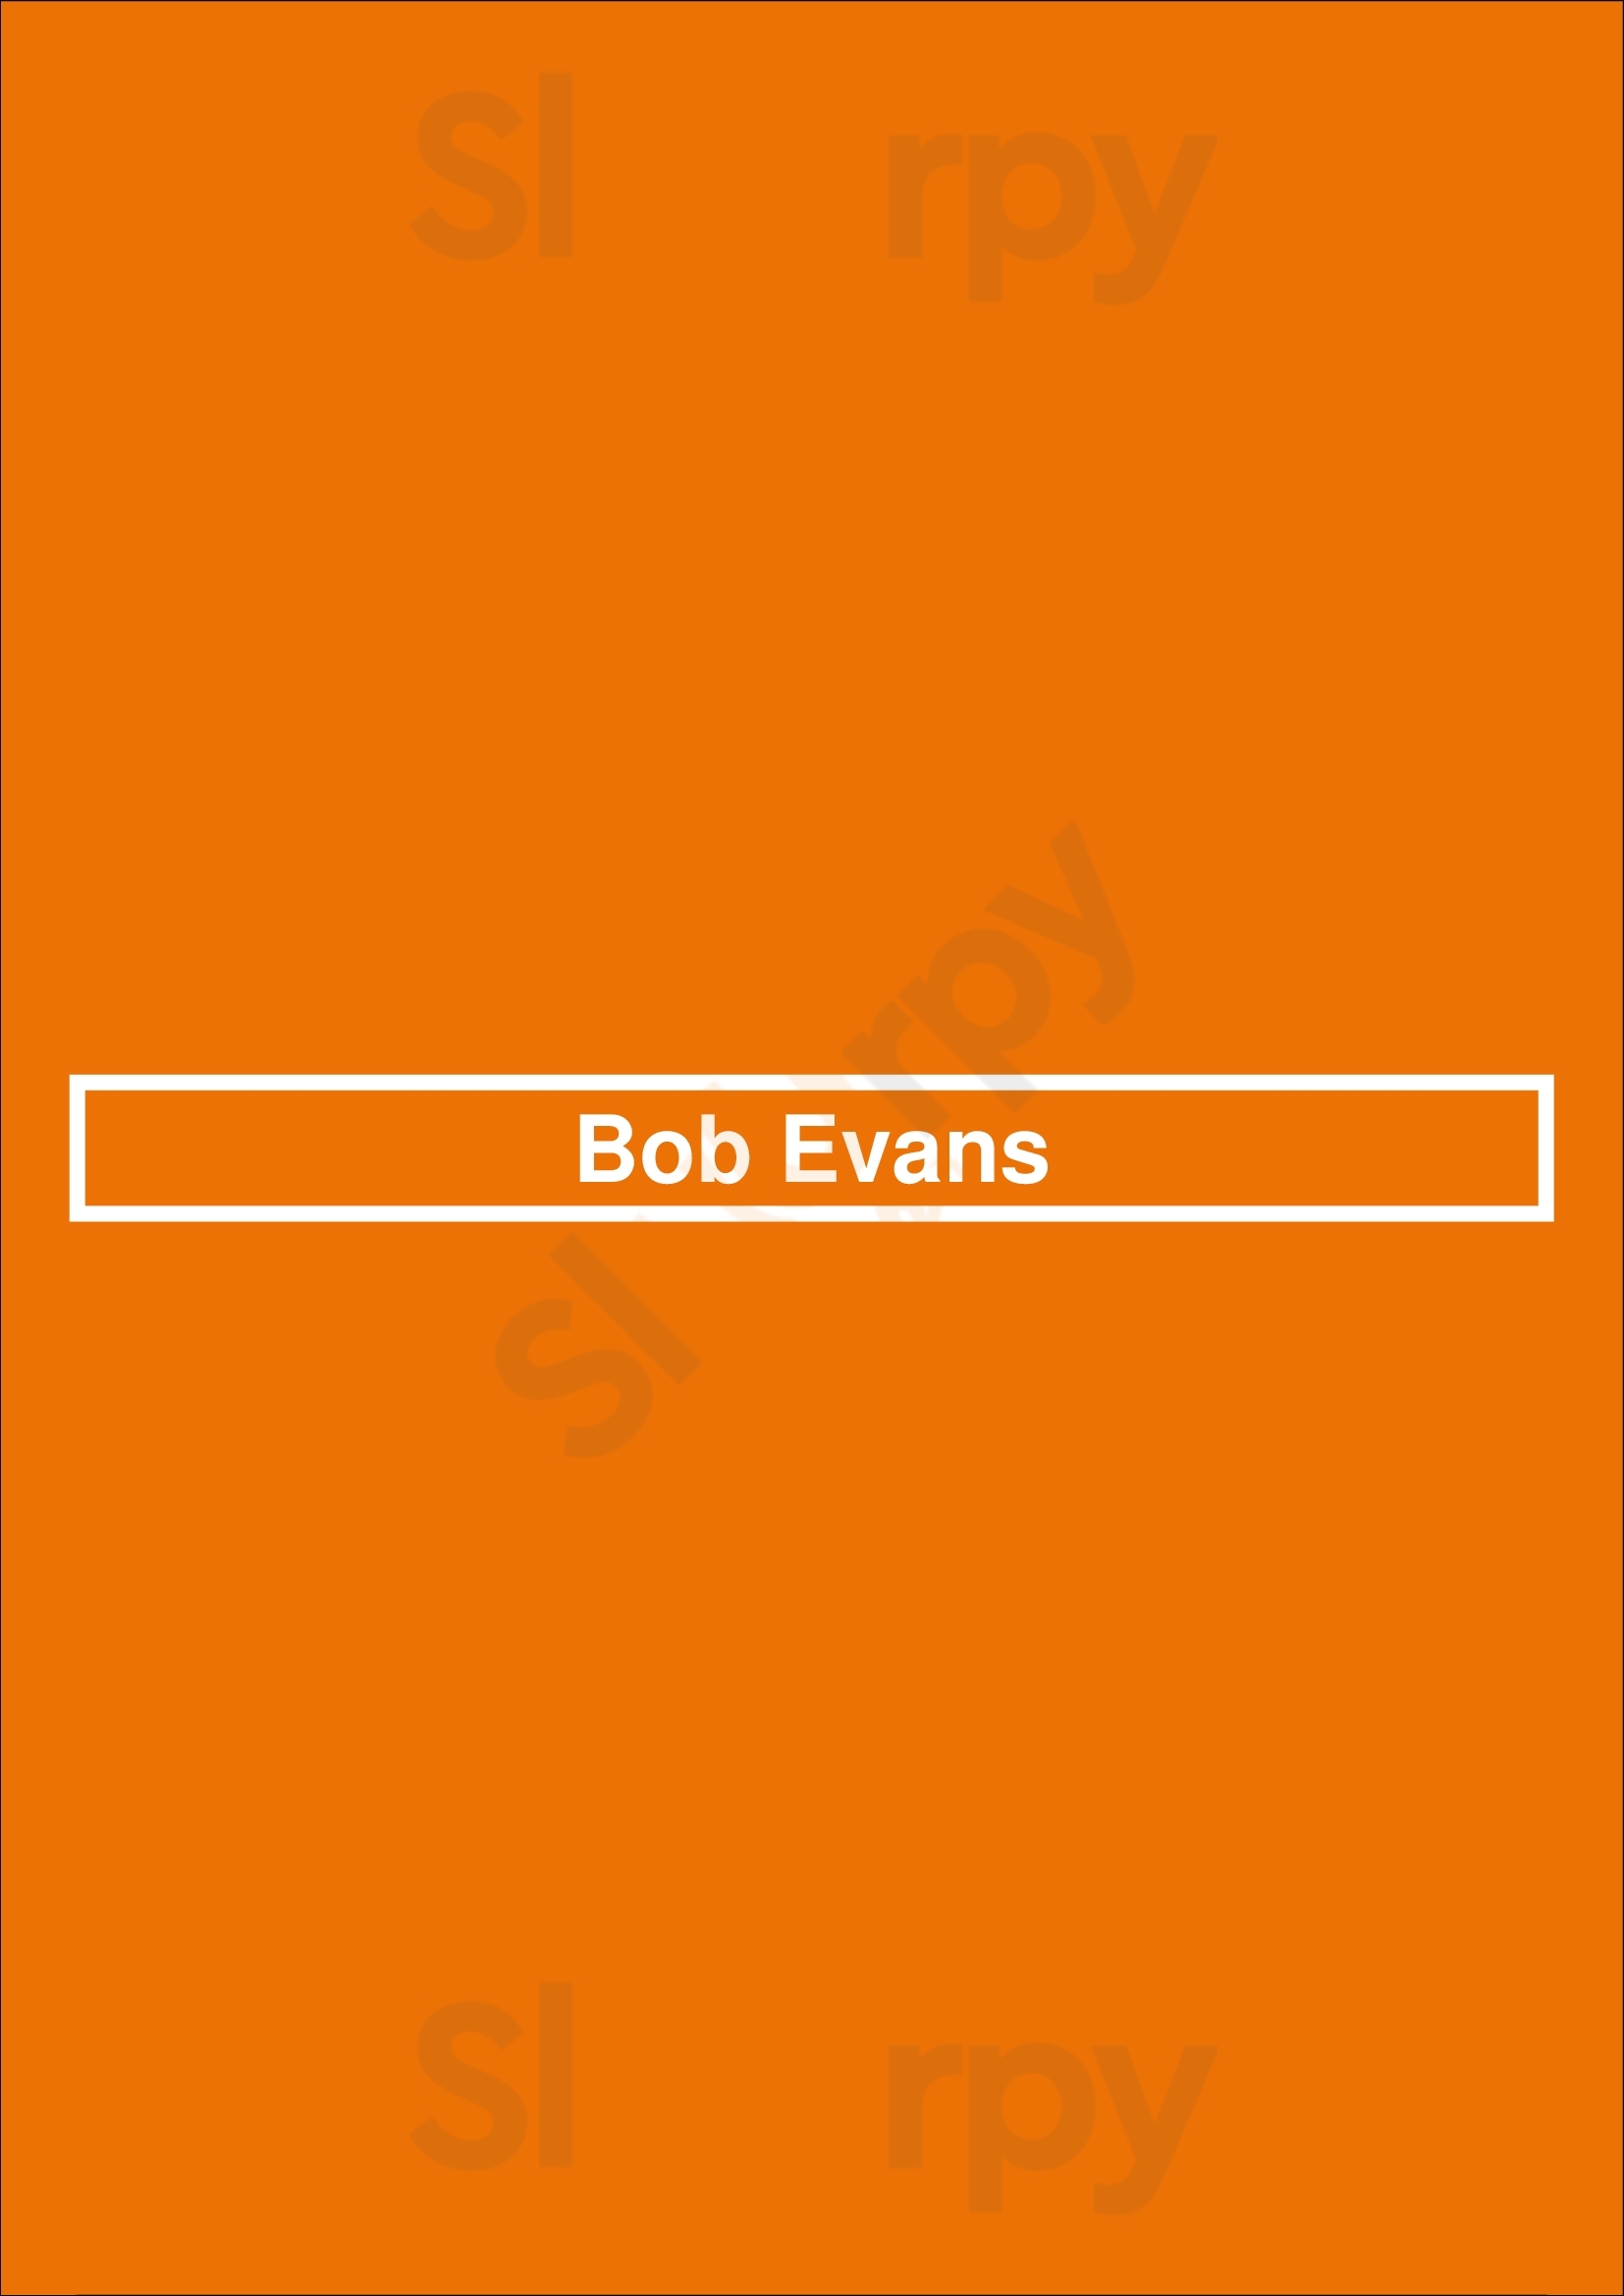 Bob Evans Columbia Menu - 1